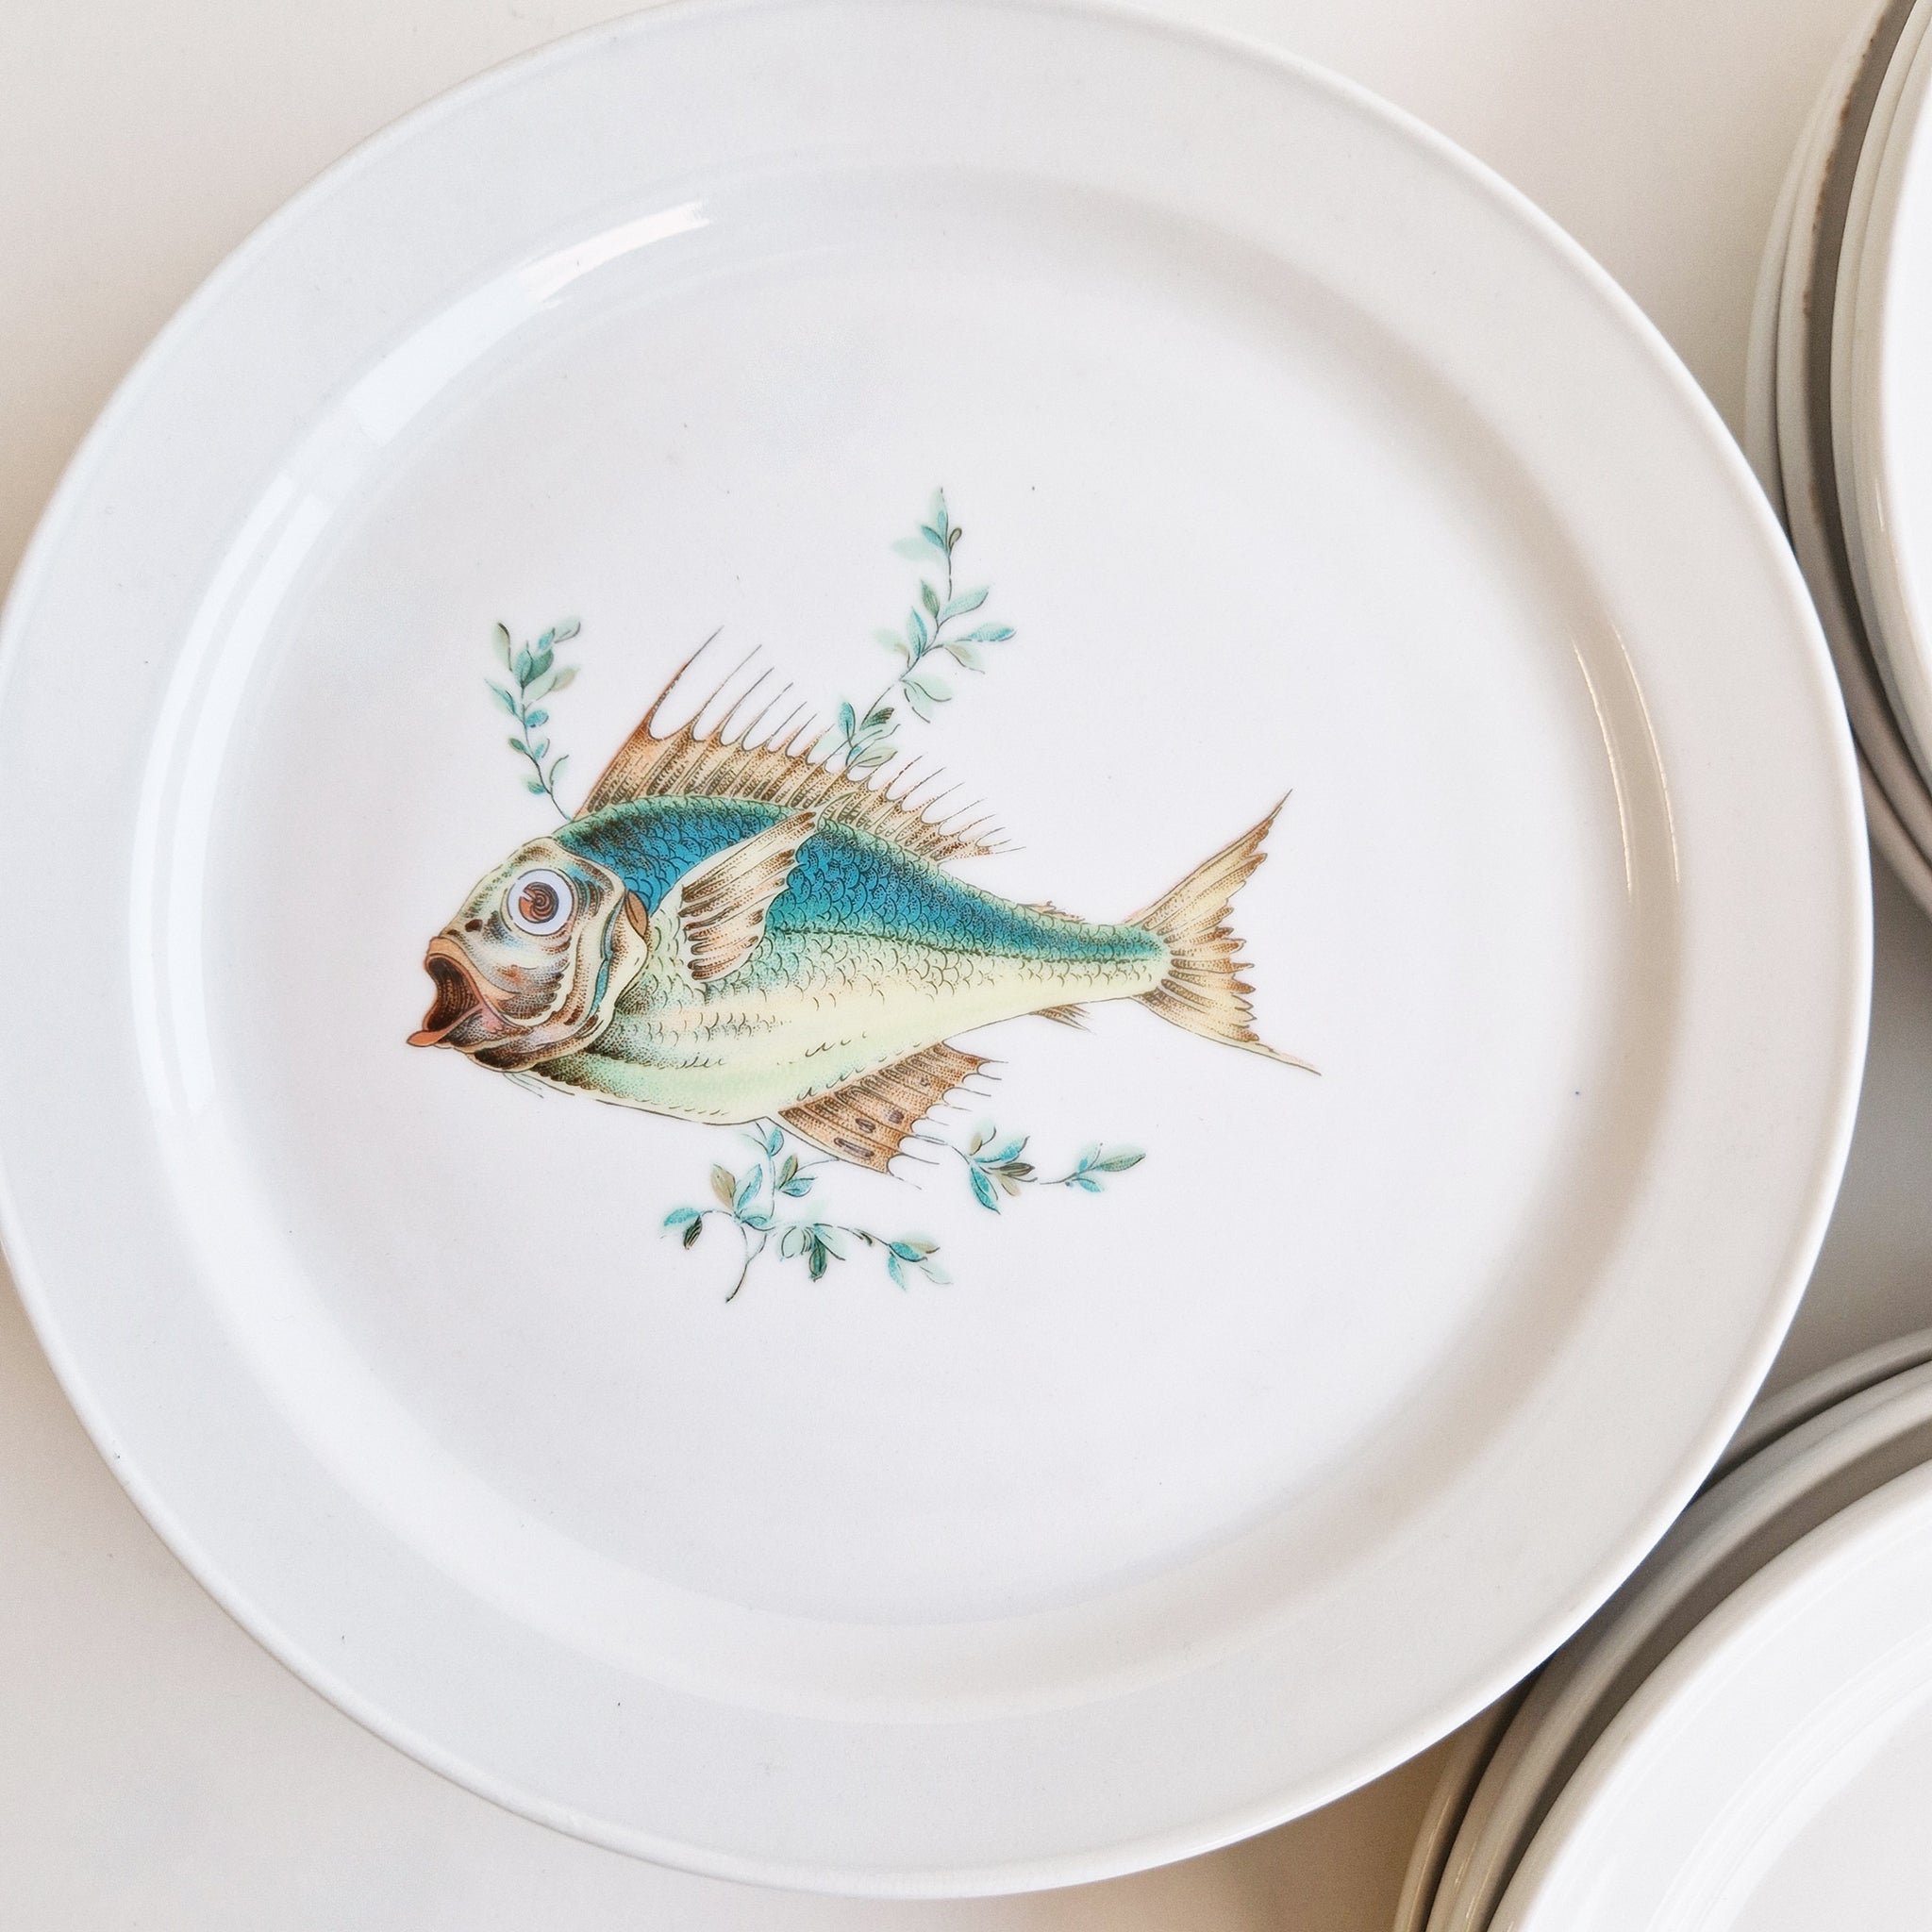 Vintage fish plates by Richard Ginori